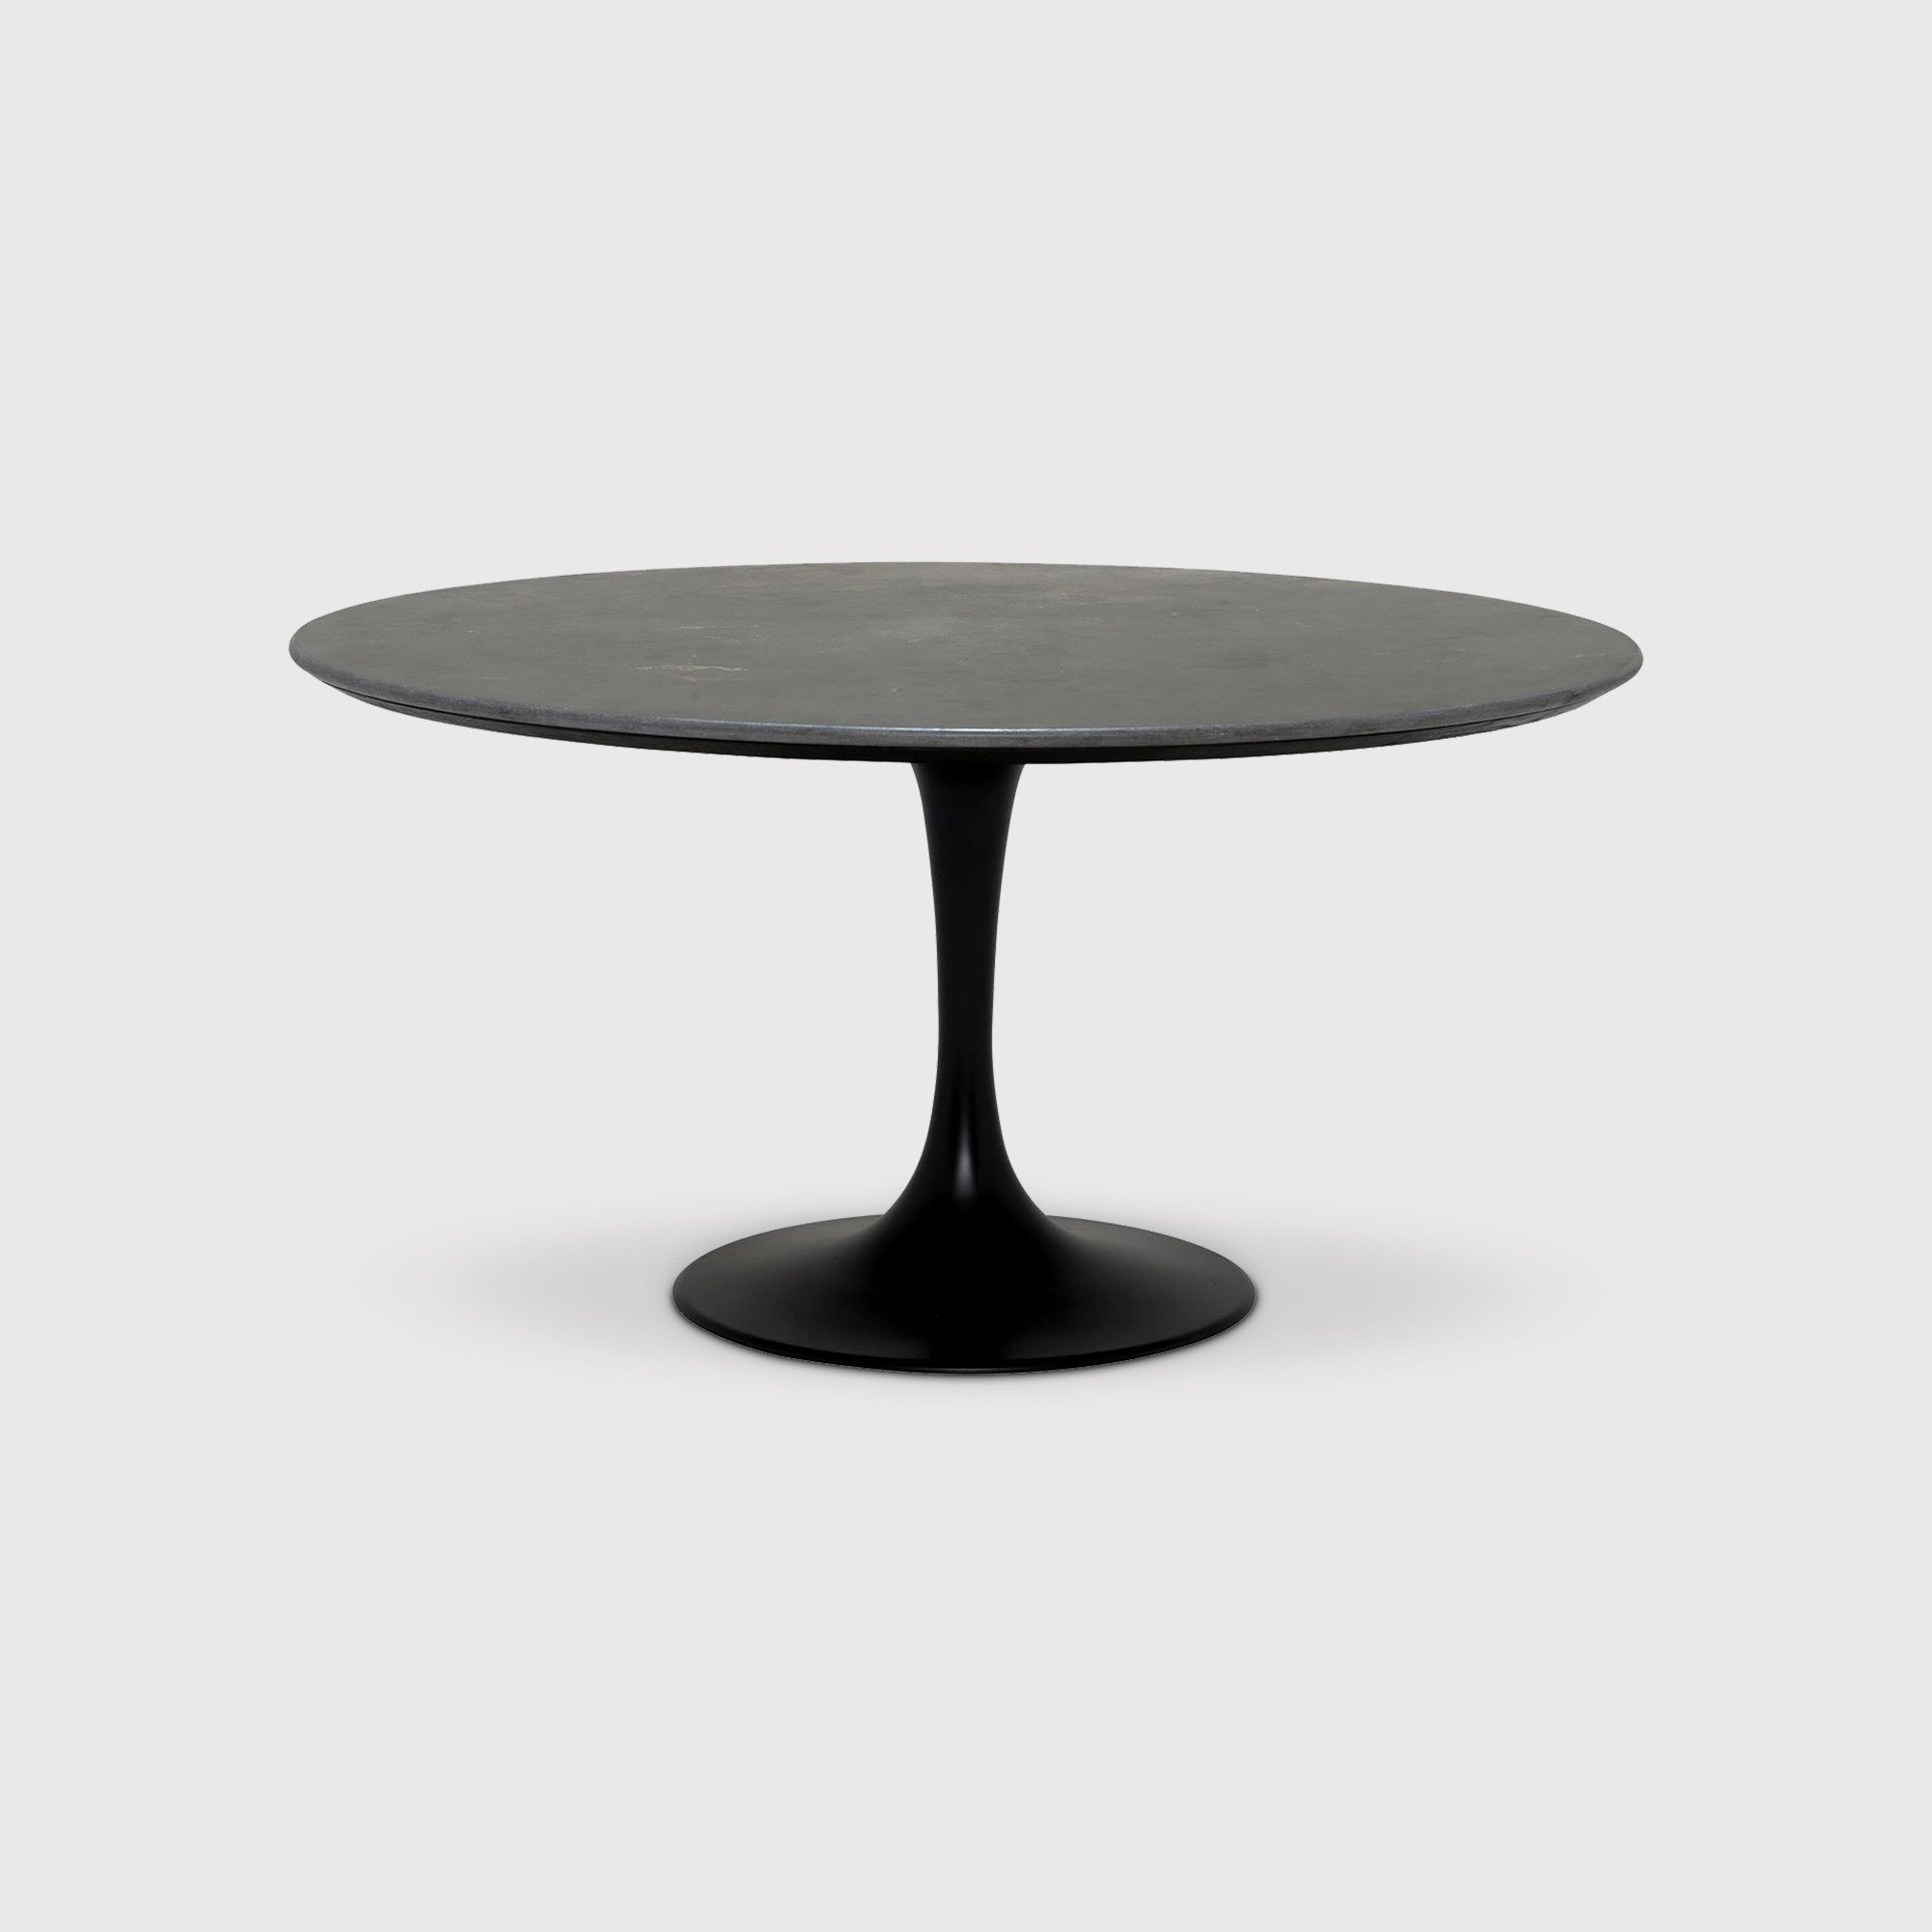 Talula Dining Table 145x75cm, Black Stone - Barker & Stonehouse - image 1